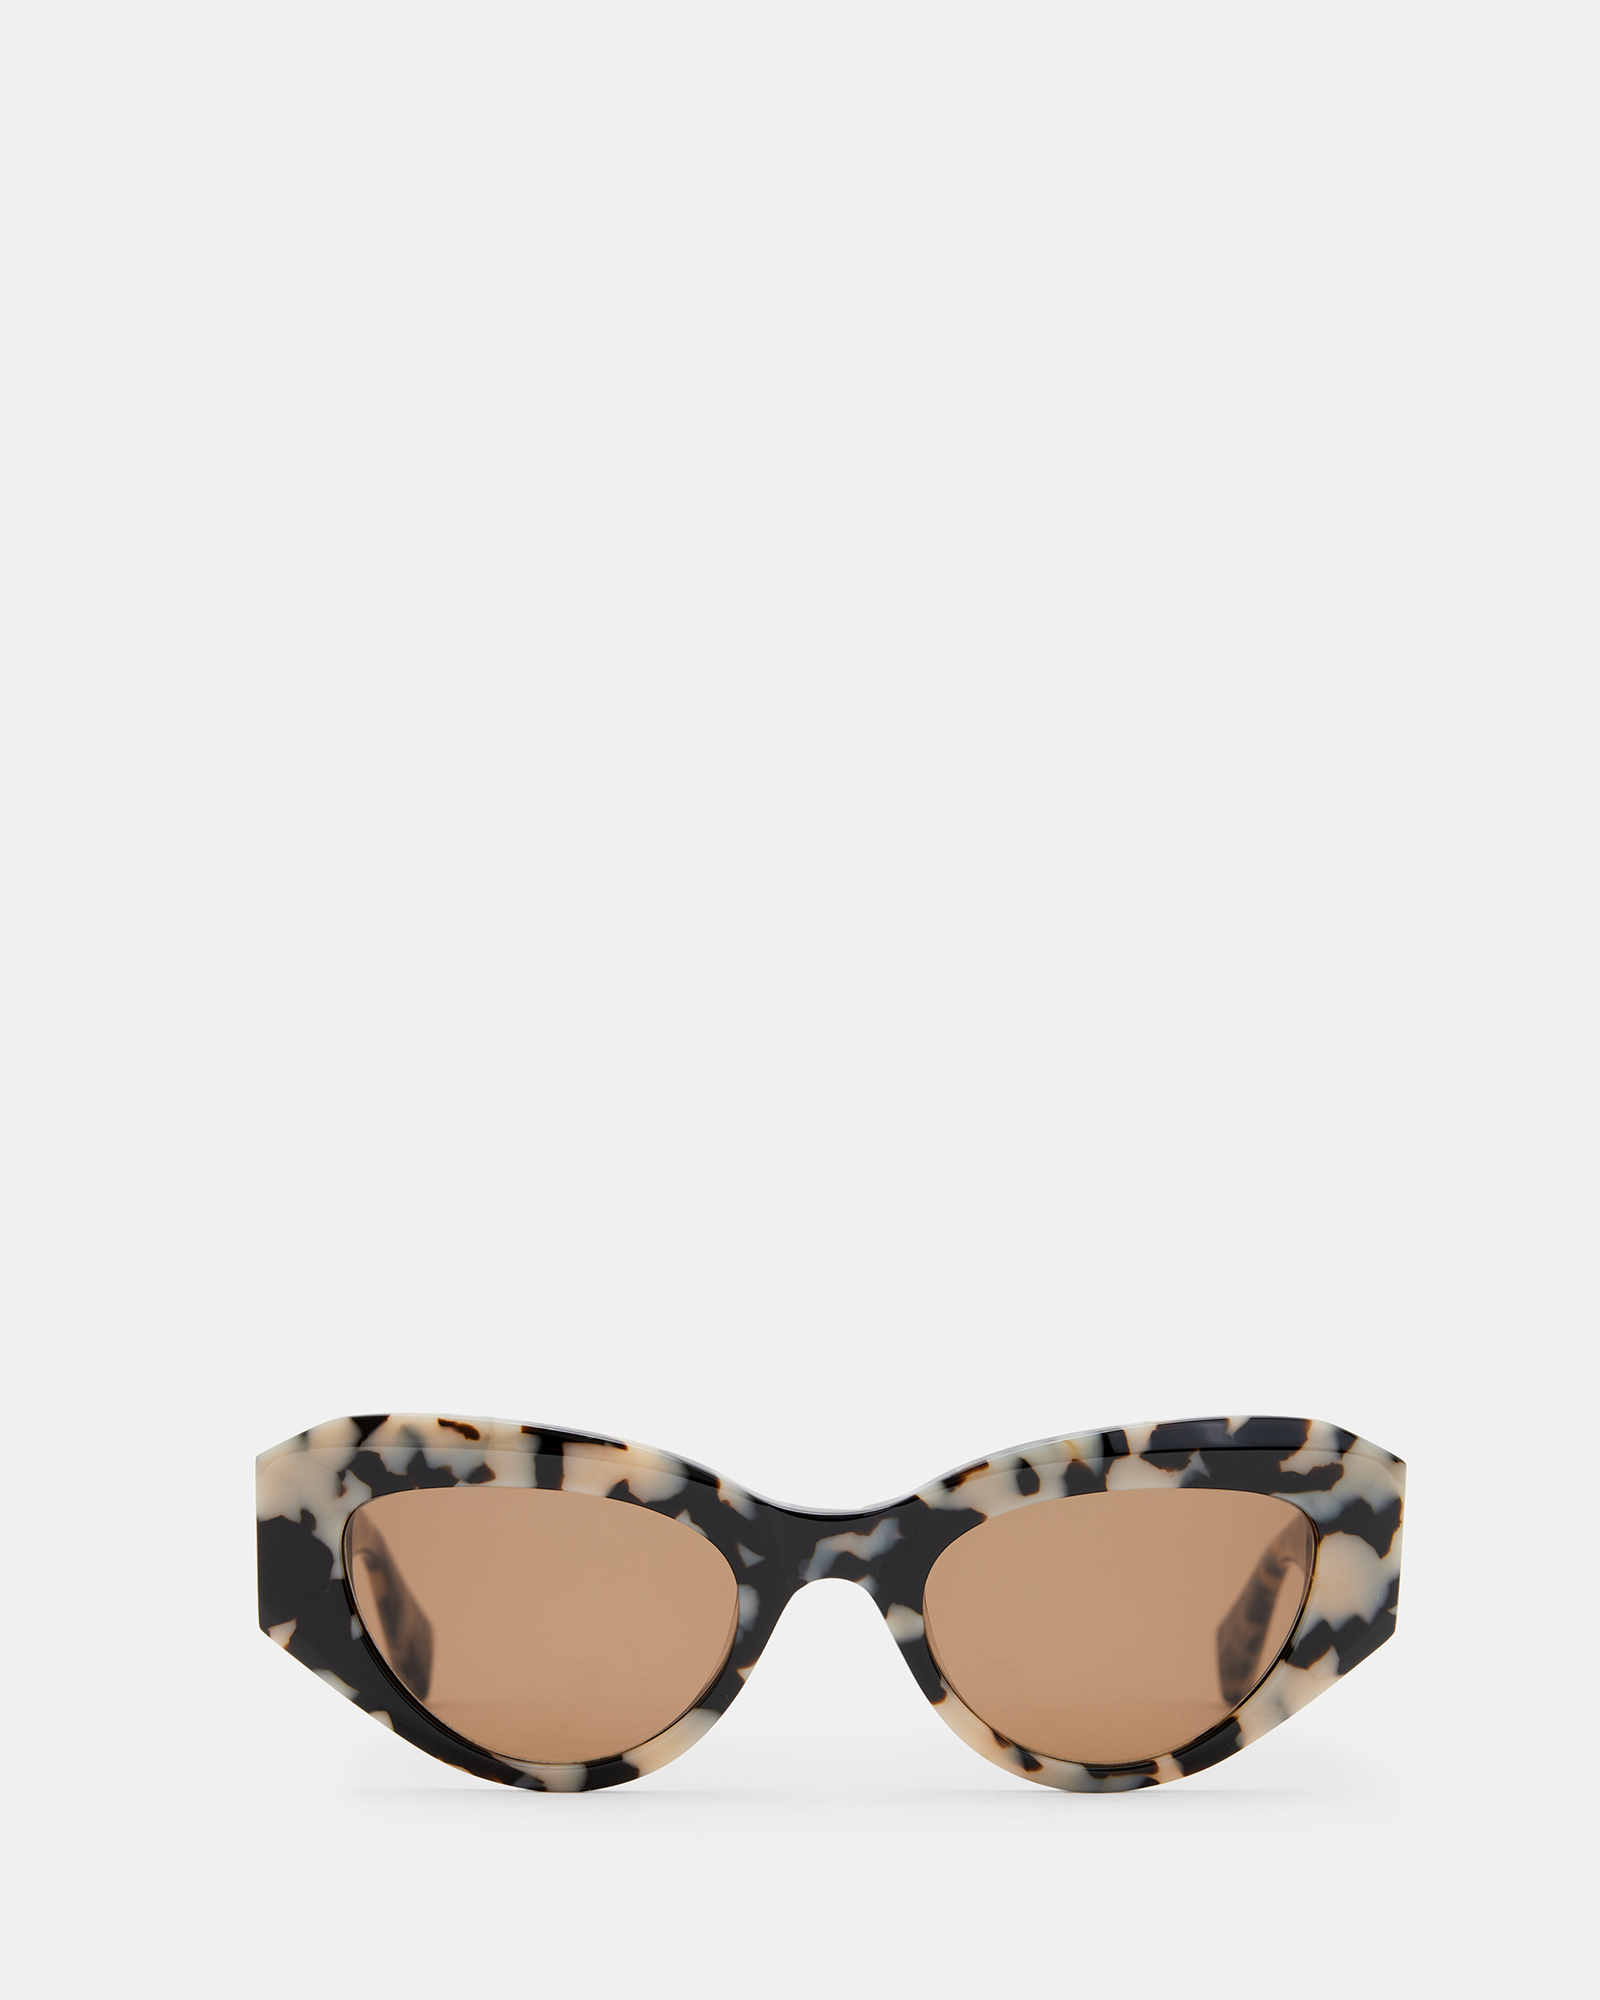 AllSaints Calypso Bevelled Cat Eye Sunglasses,, SNOW LEOPARD